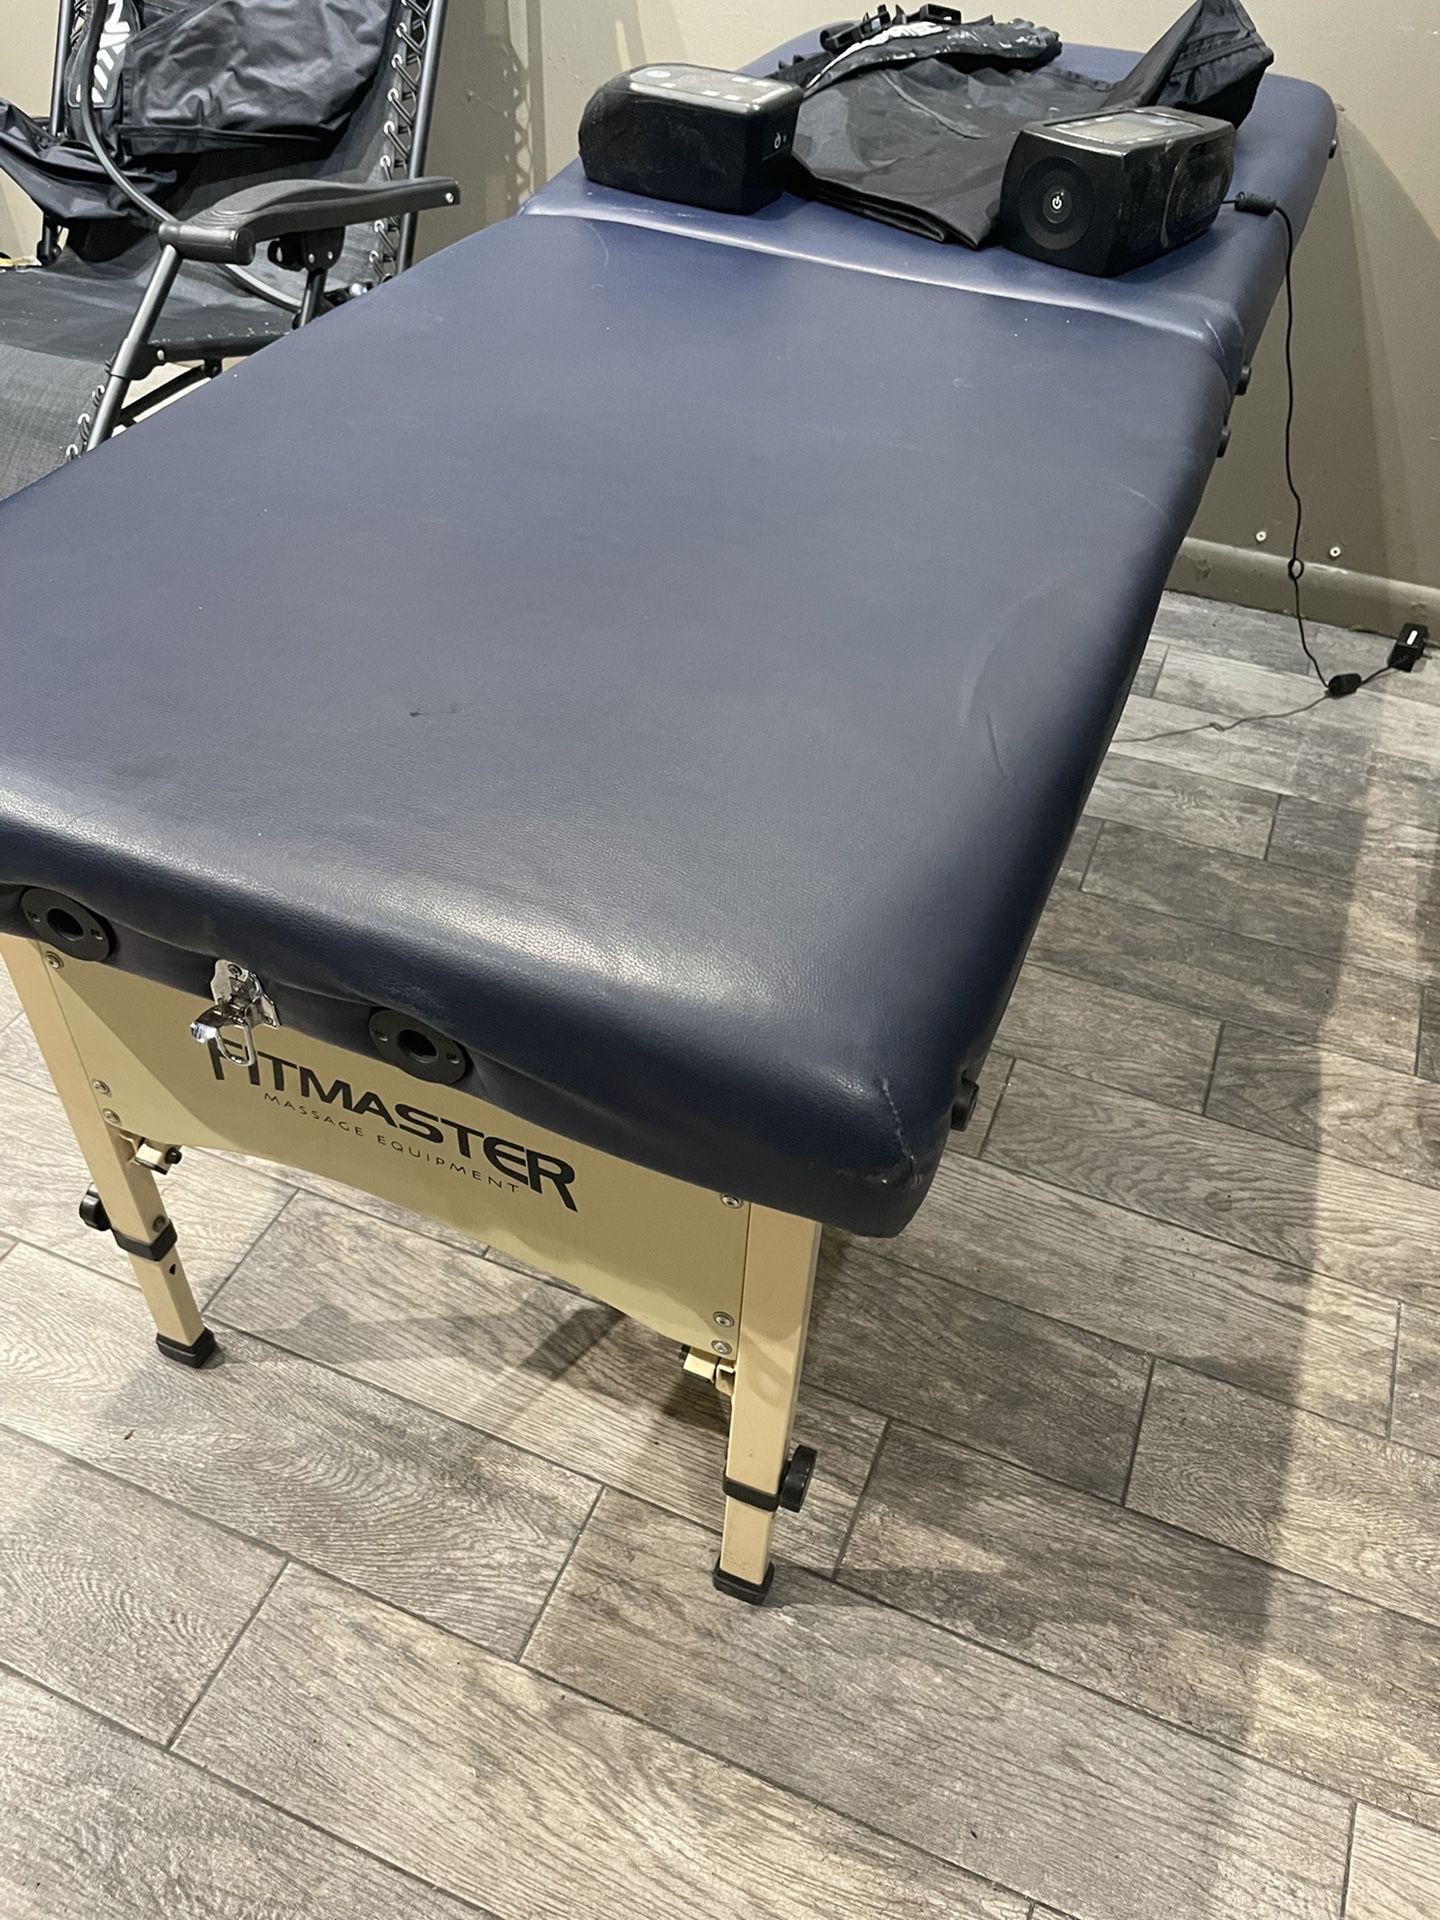 Portable Massage Table 